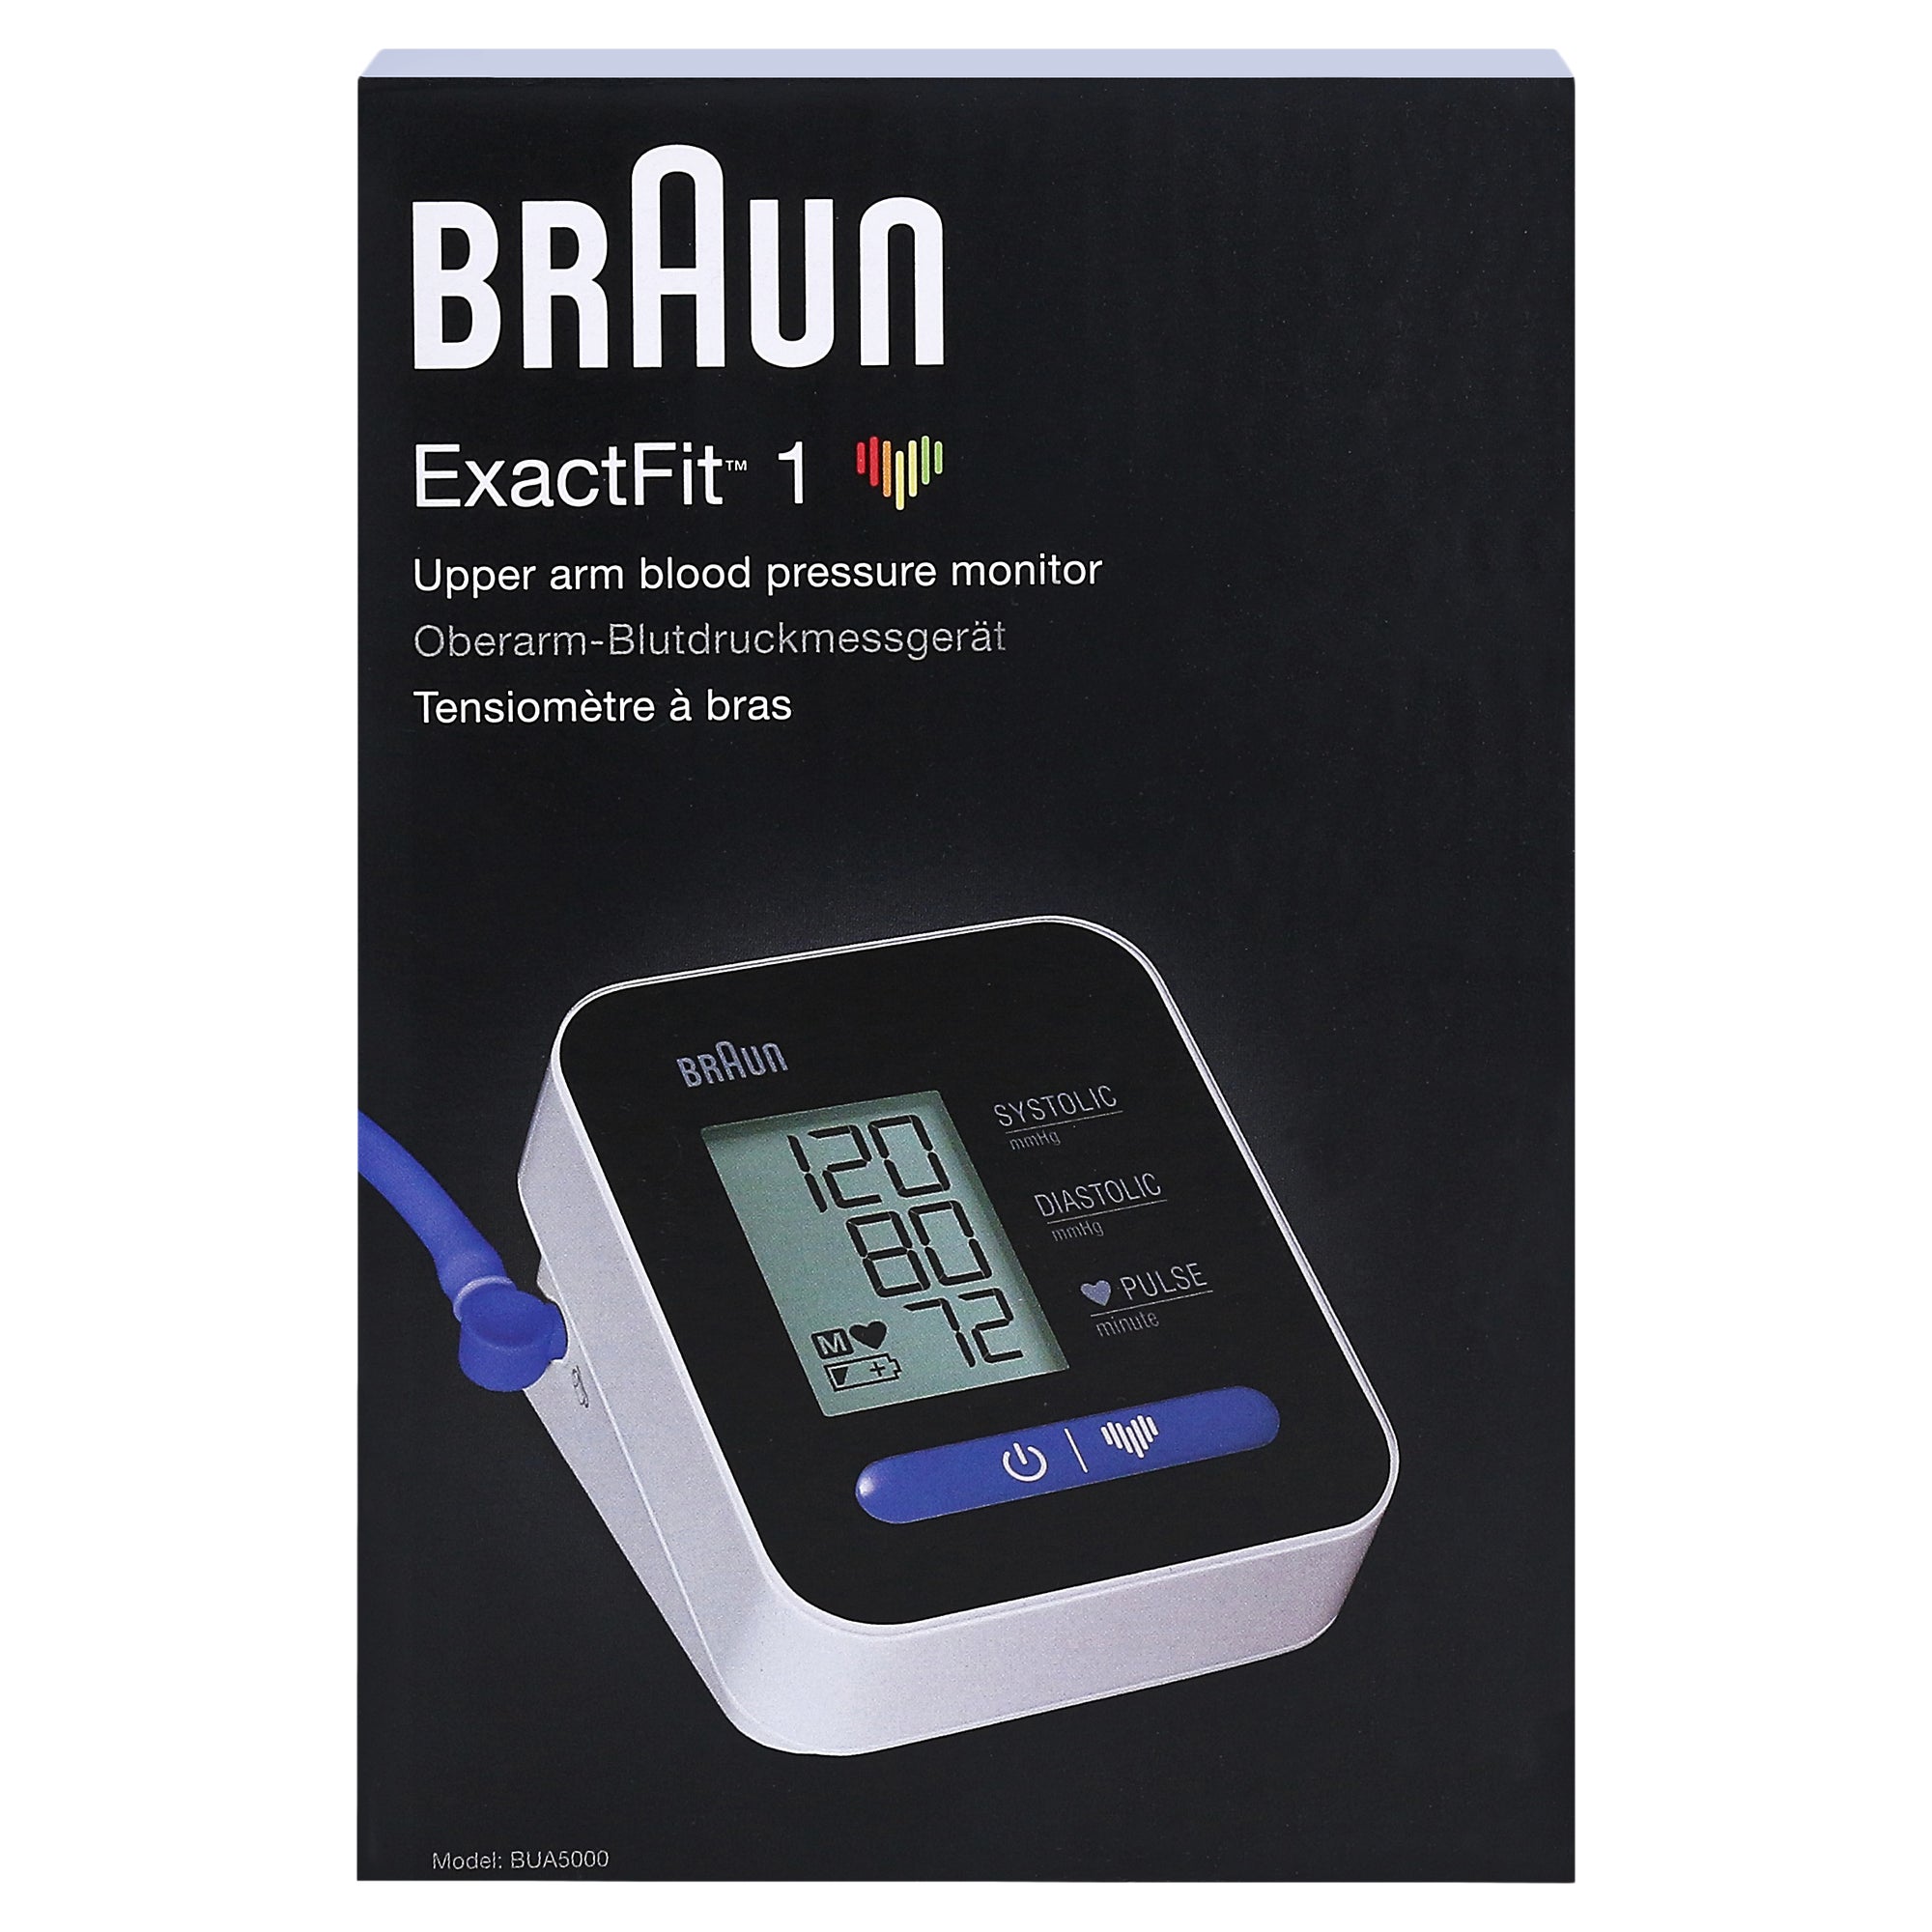 ExactFit 1 Oberarm-Blutdruckmessgerät, 1 | St. DocMorris online kaufen